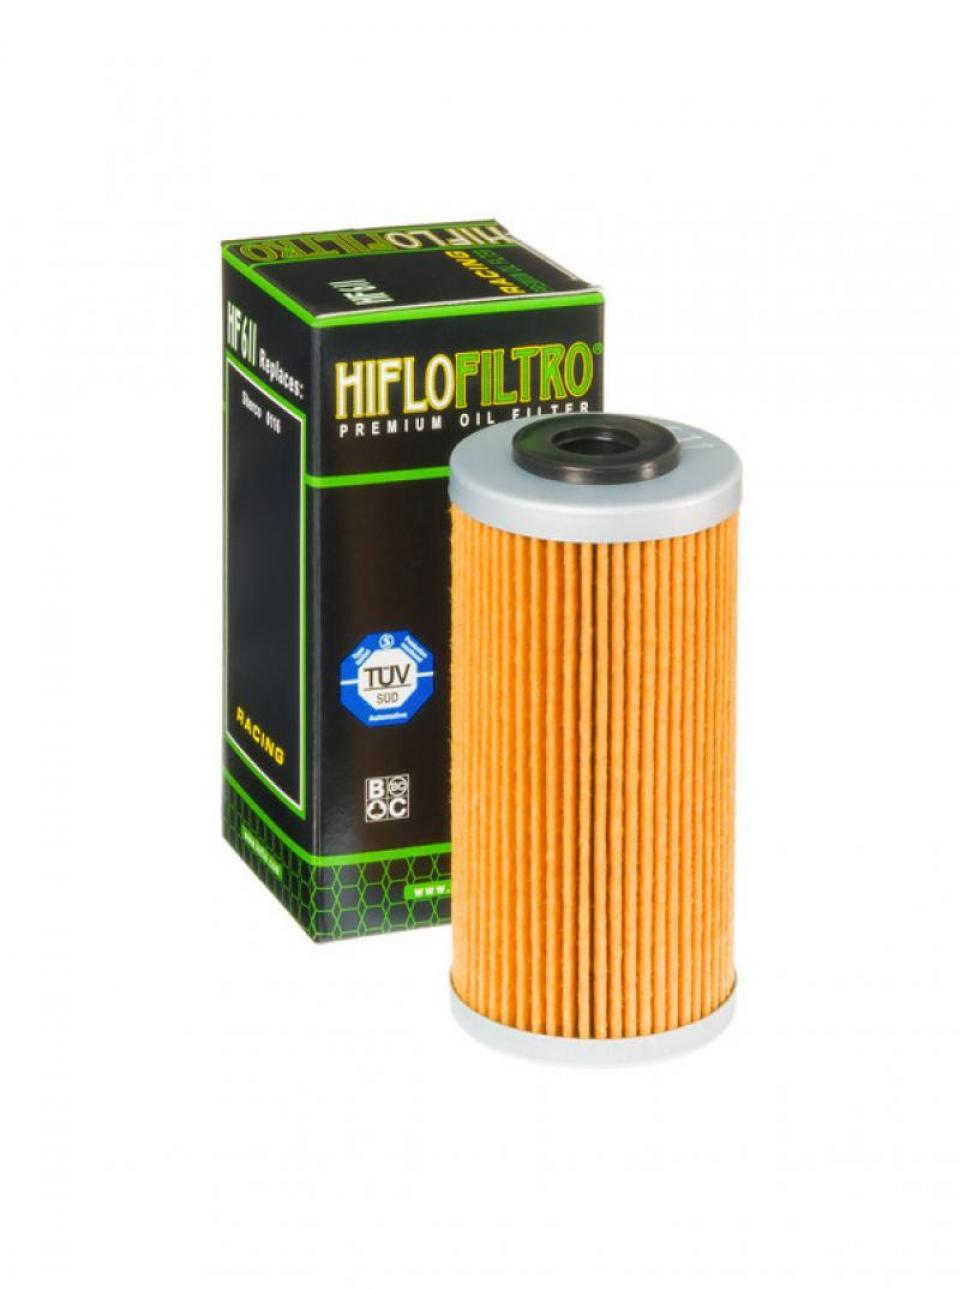 Filtre à huile Hiflo Filtro pour Moto SHERCO 250 Se 2.5 I F 4T Enduro 2008-2011 Neuf